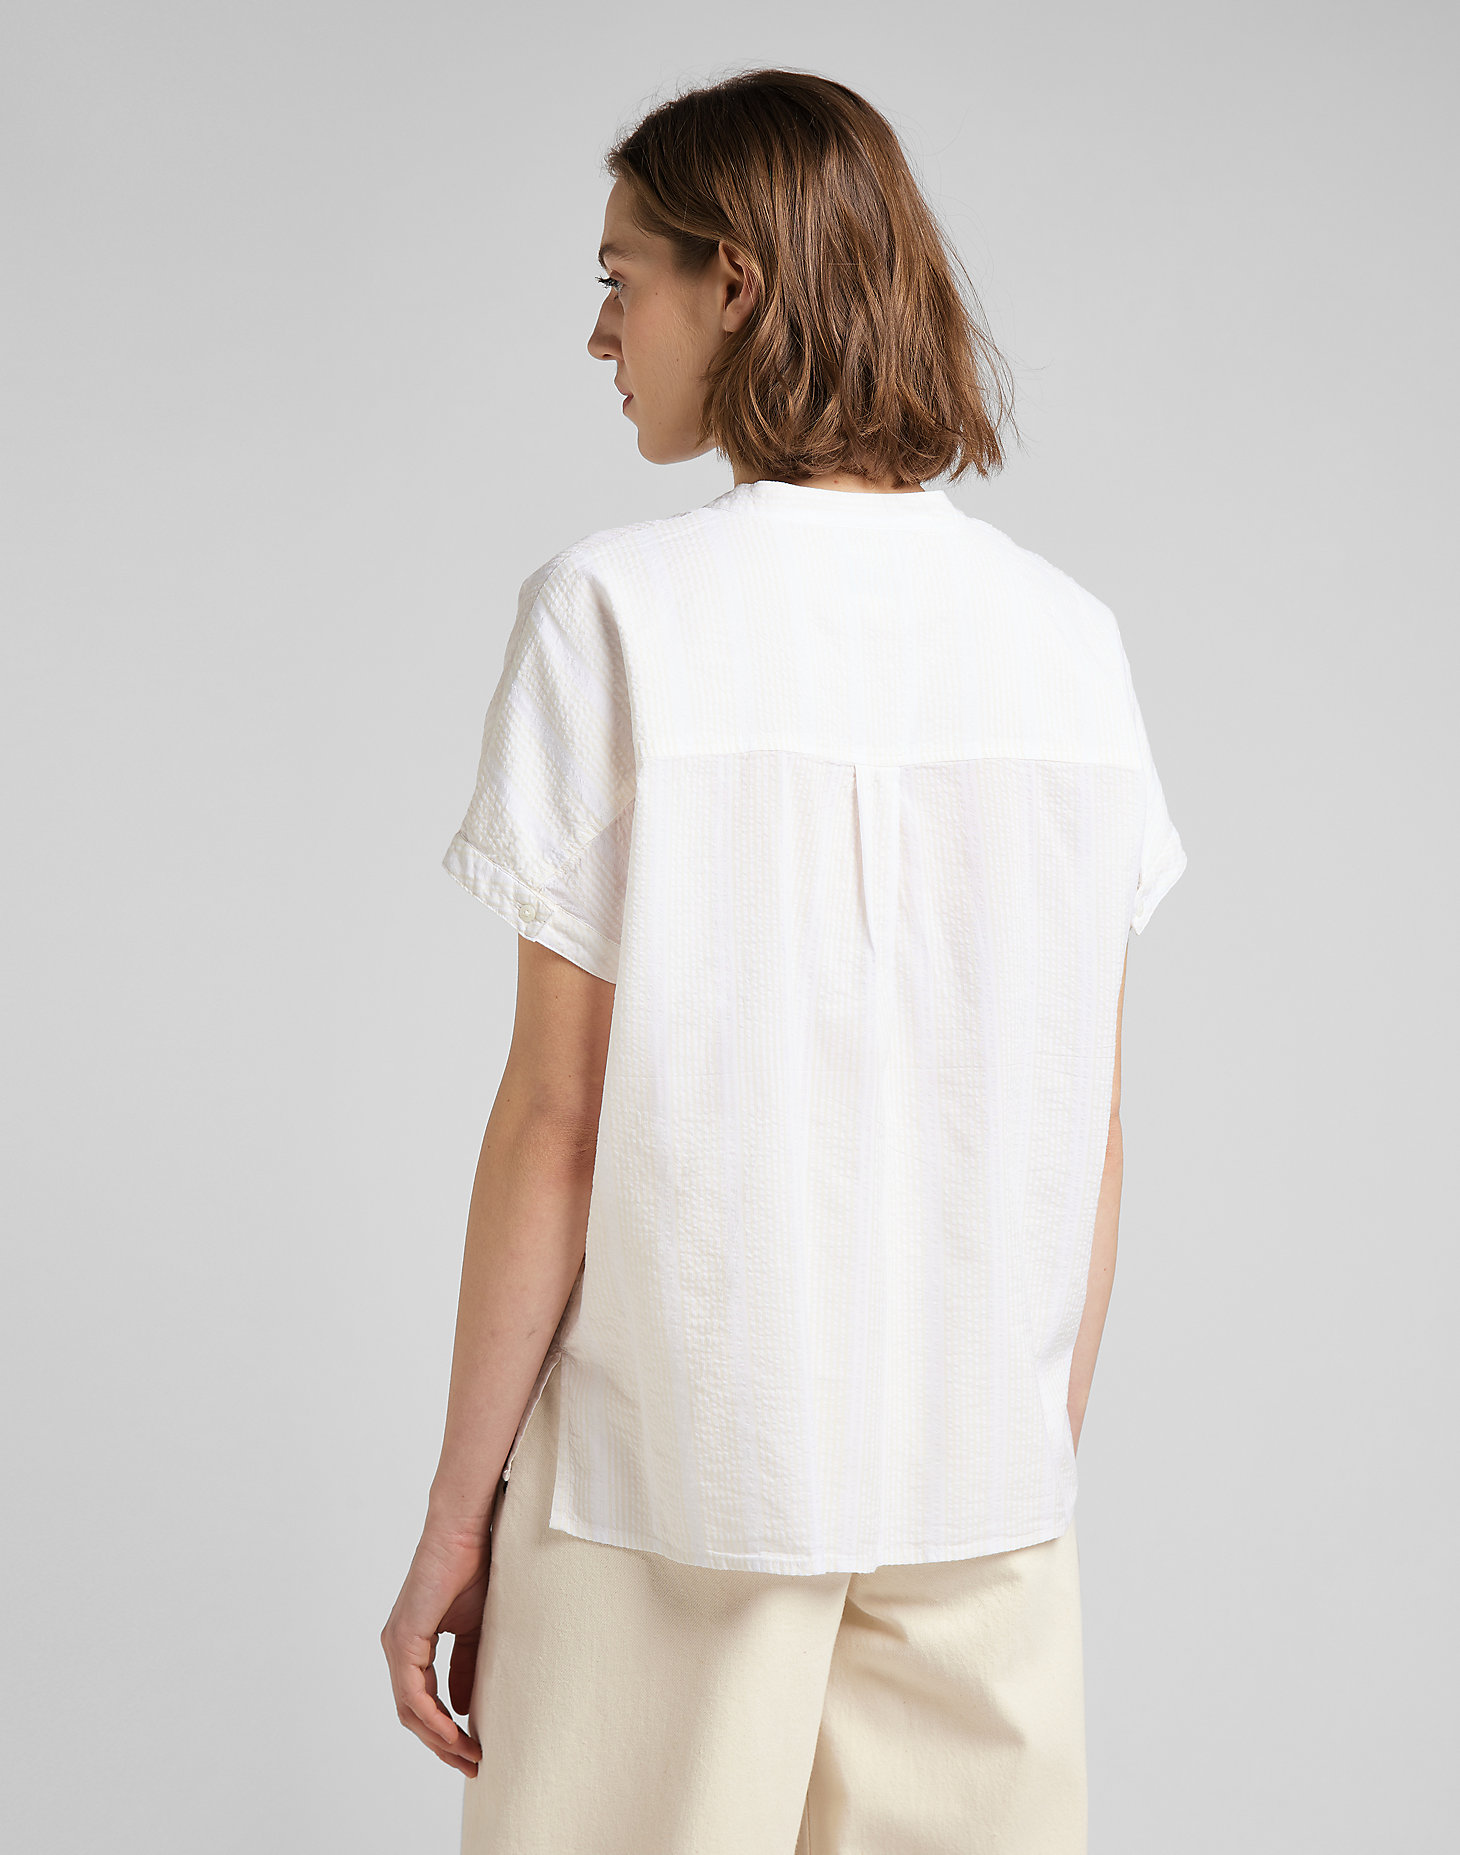 Cap Sleeve Shirt in Bright White alternative view 1